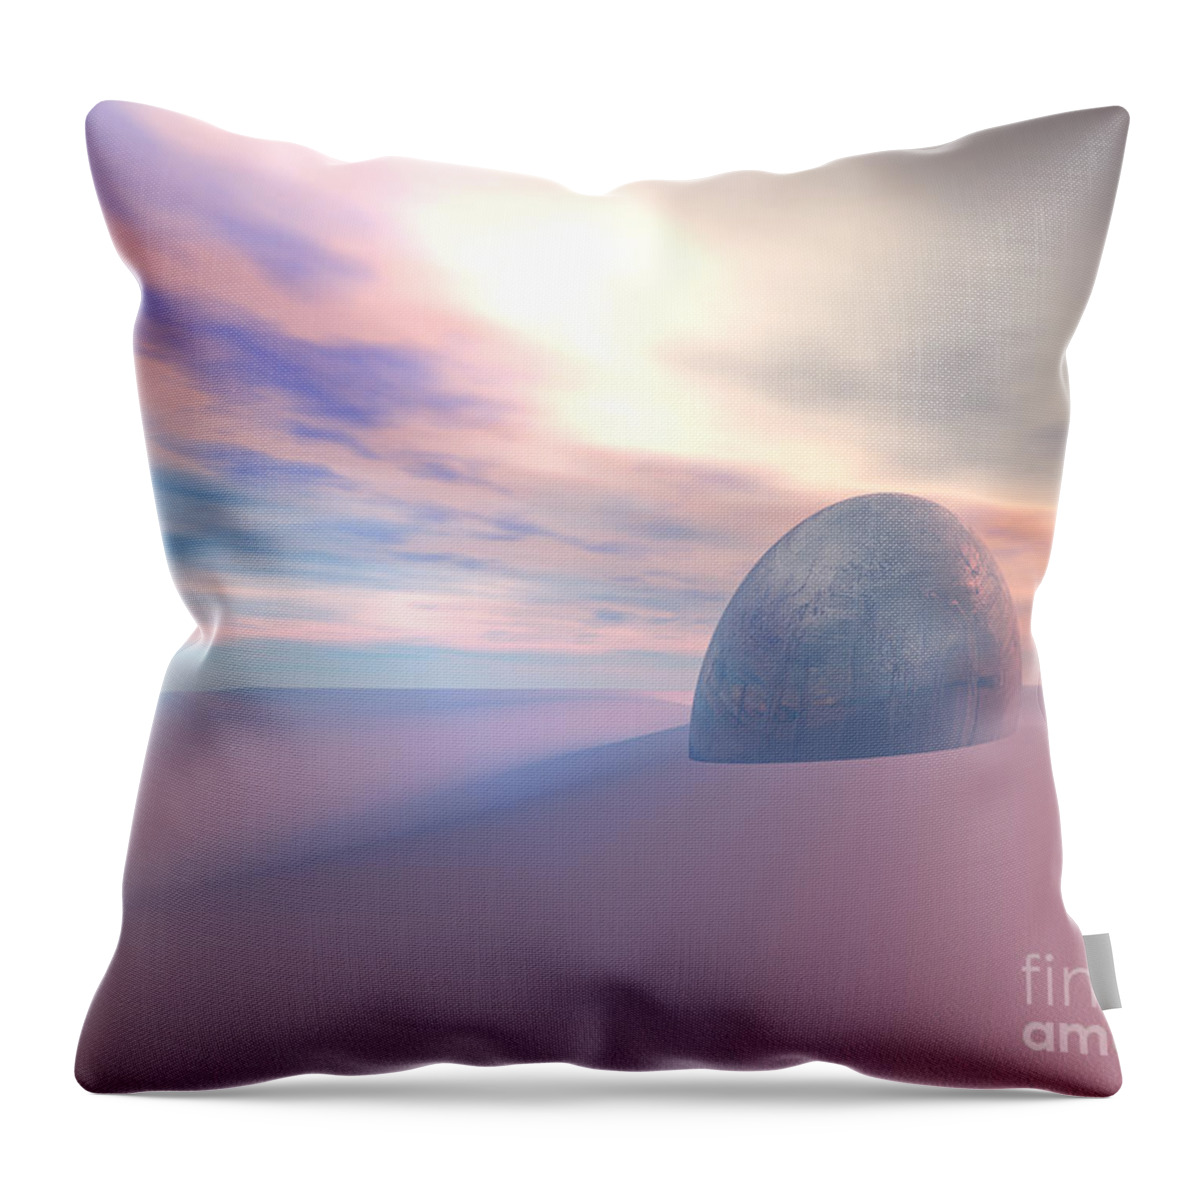 Mysterious Throw Pillow featuring the digital art Alien Artifact In Desert by Phil Perkins